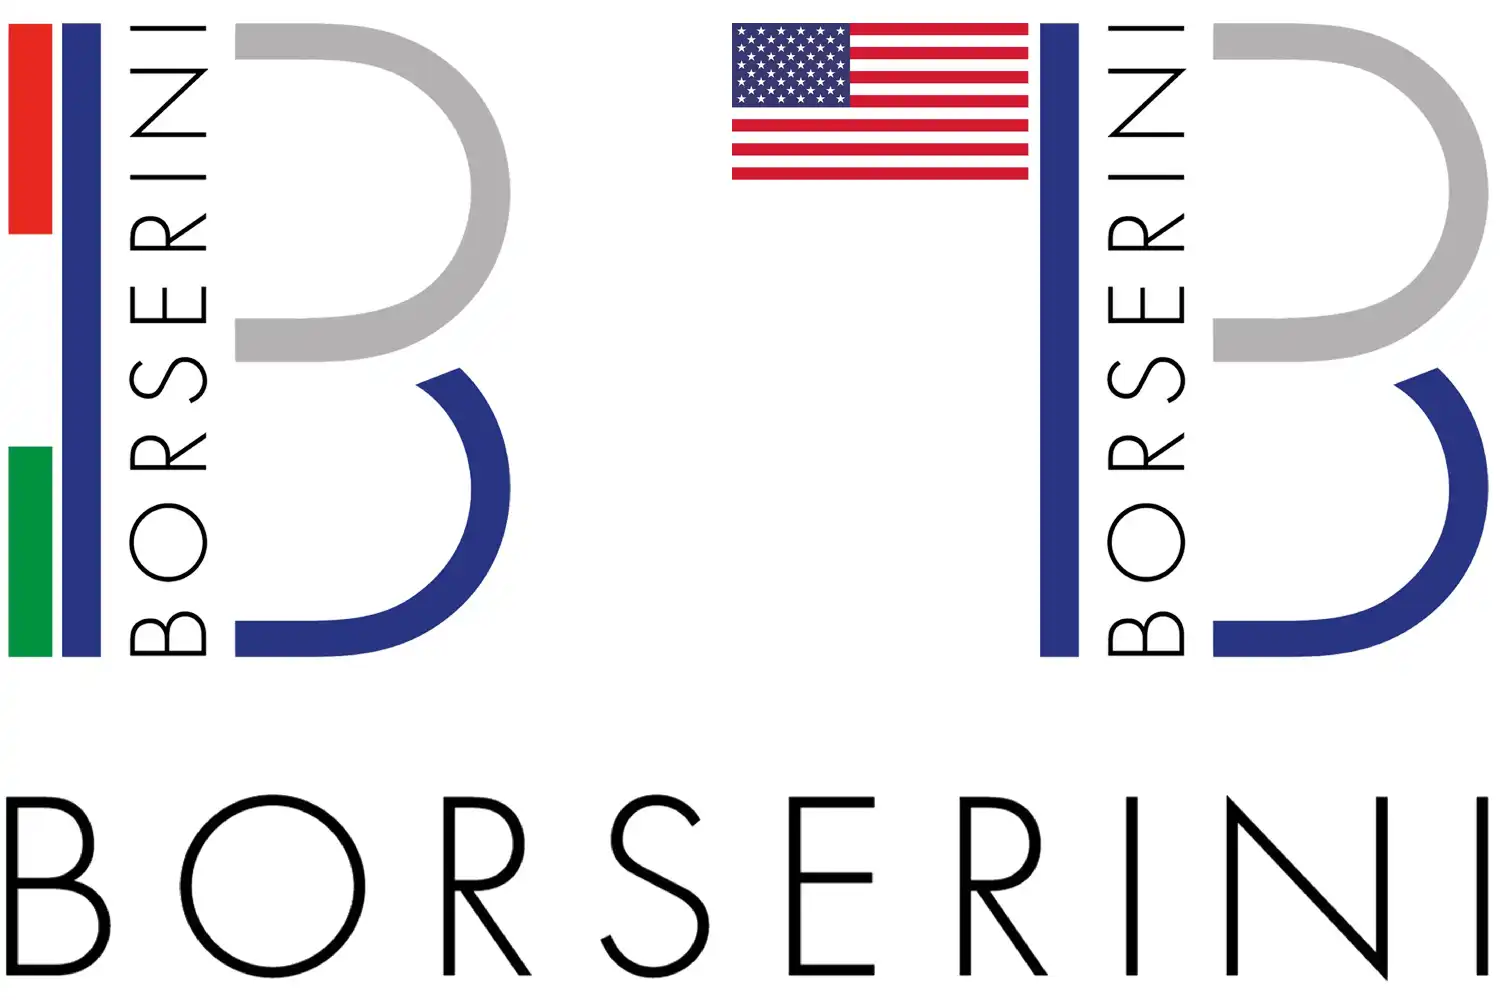 Borserini Italia + Borserini USA